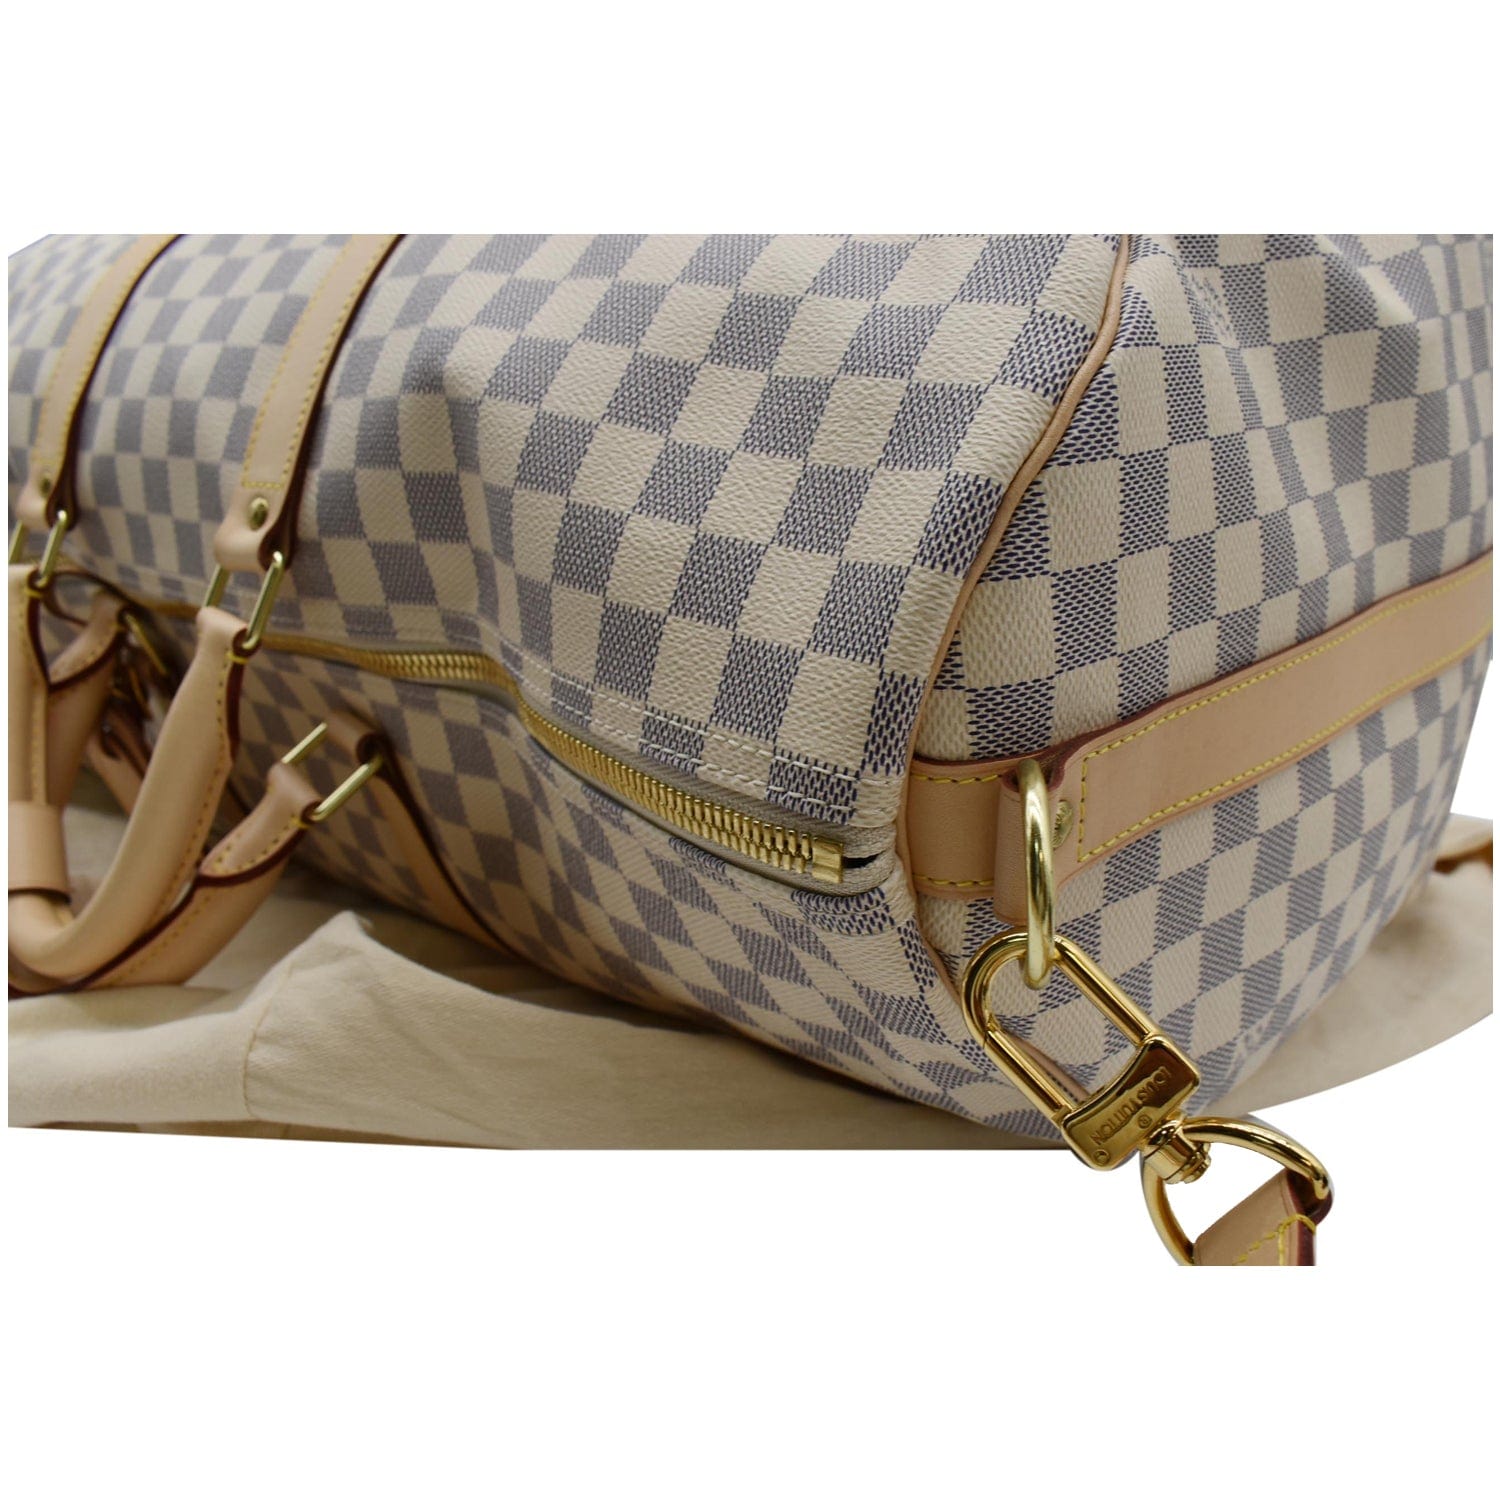 Replica Louis Vuitton Keepall Travel Bags At Cheap Price